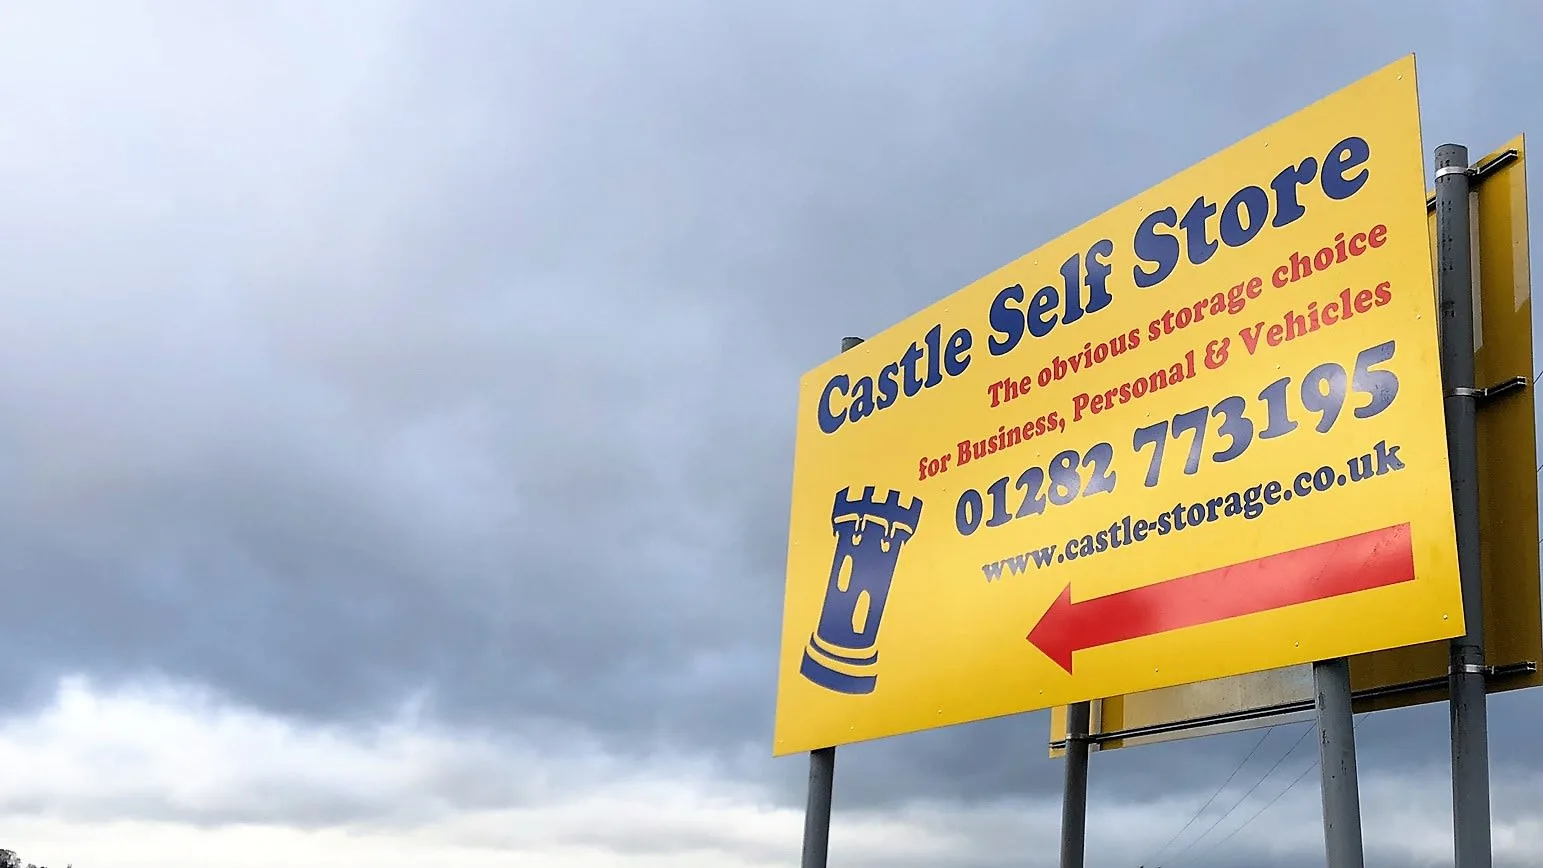 Castle Self Store Ltd Burnley 01282 773195